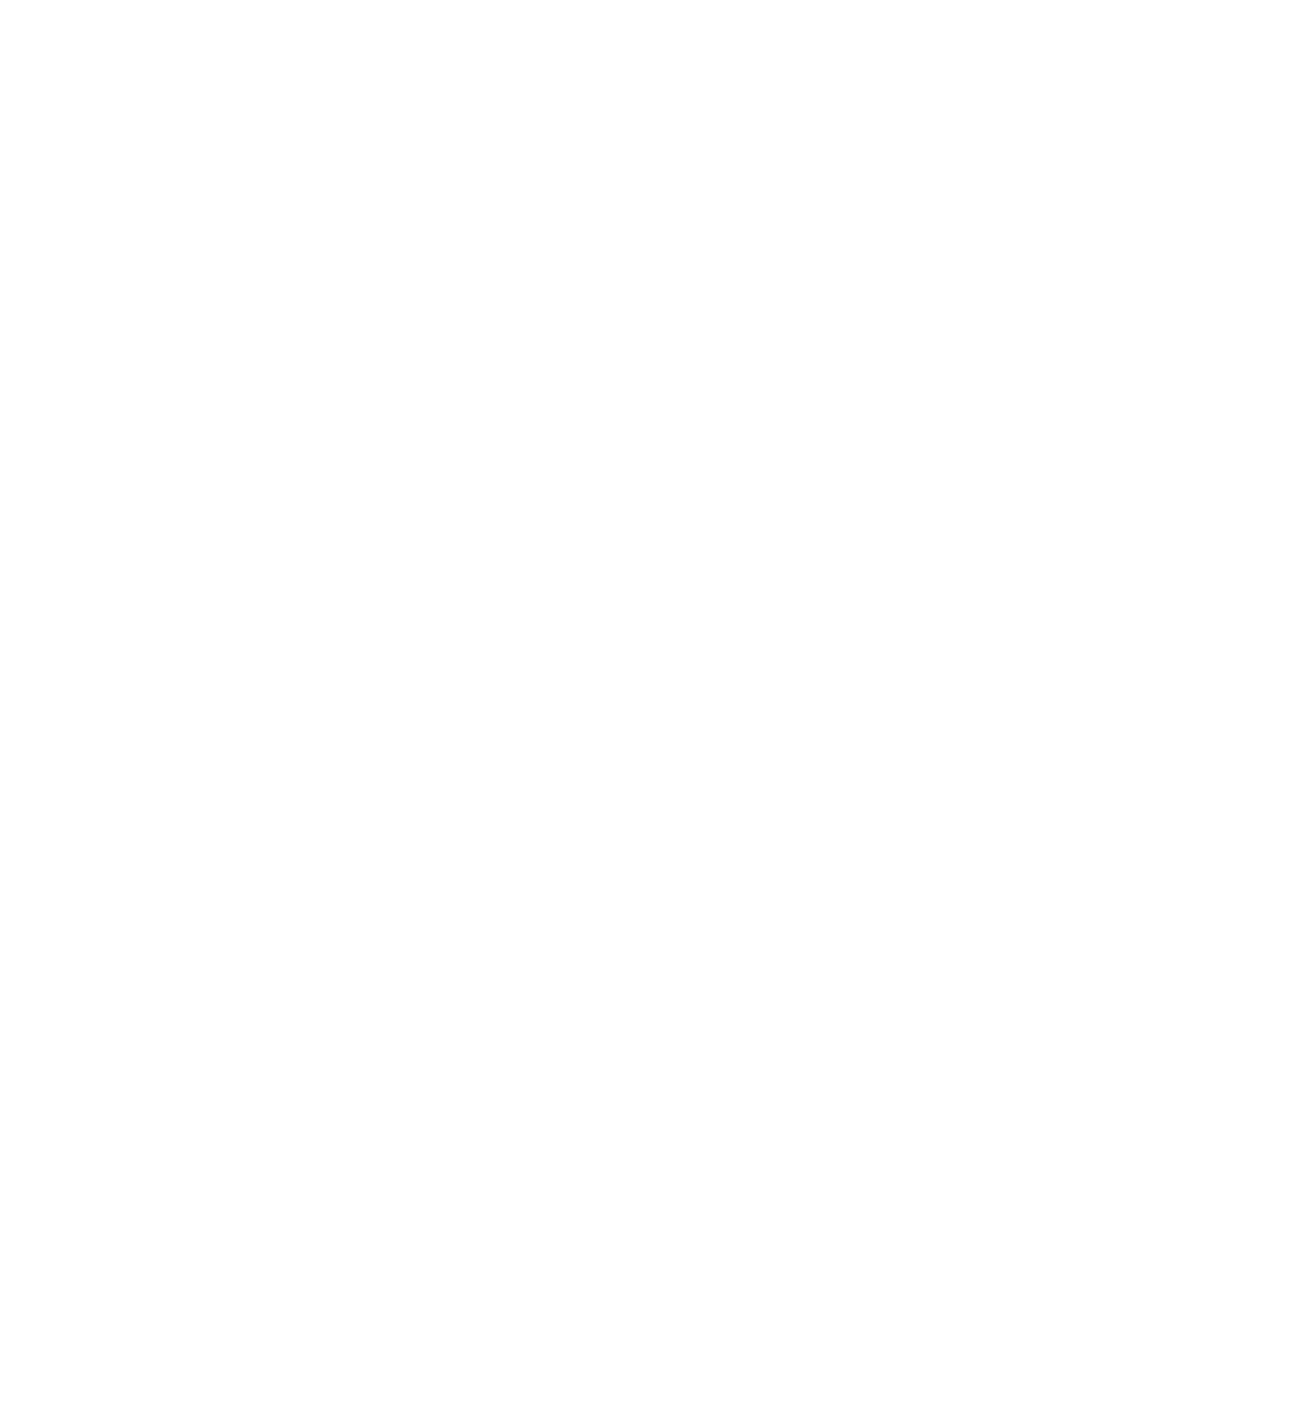 Toitū - Carbon reduction organisation